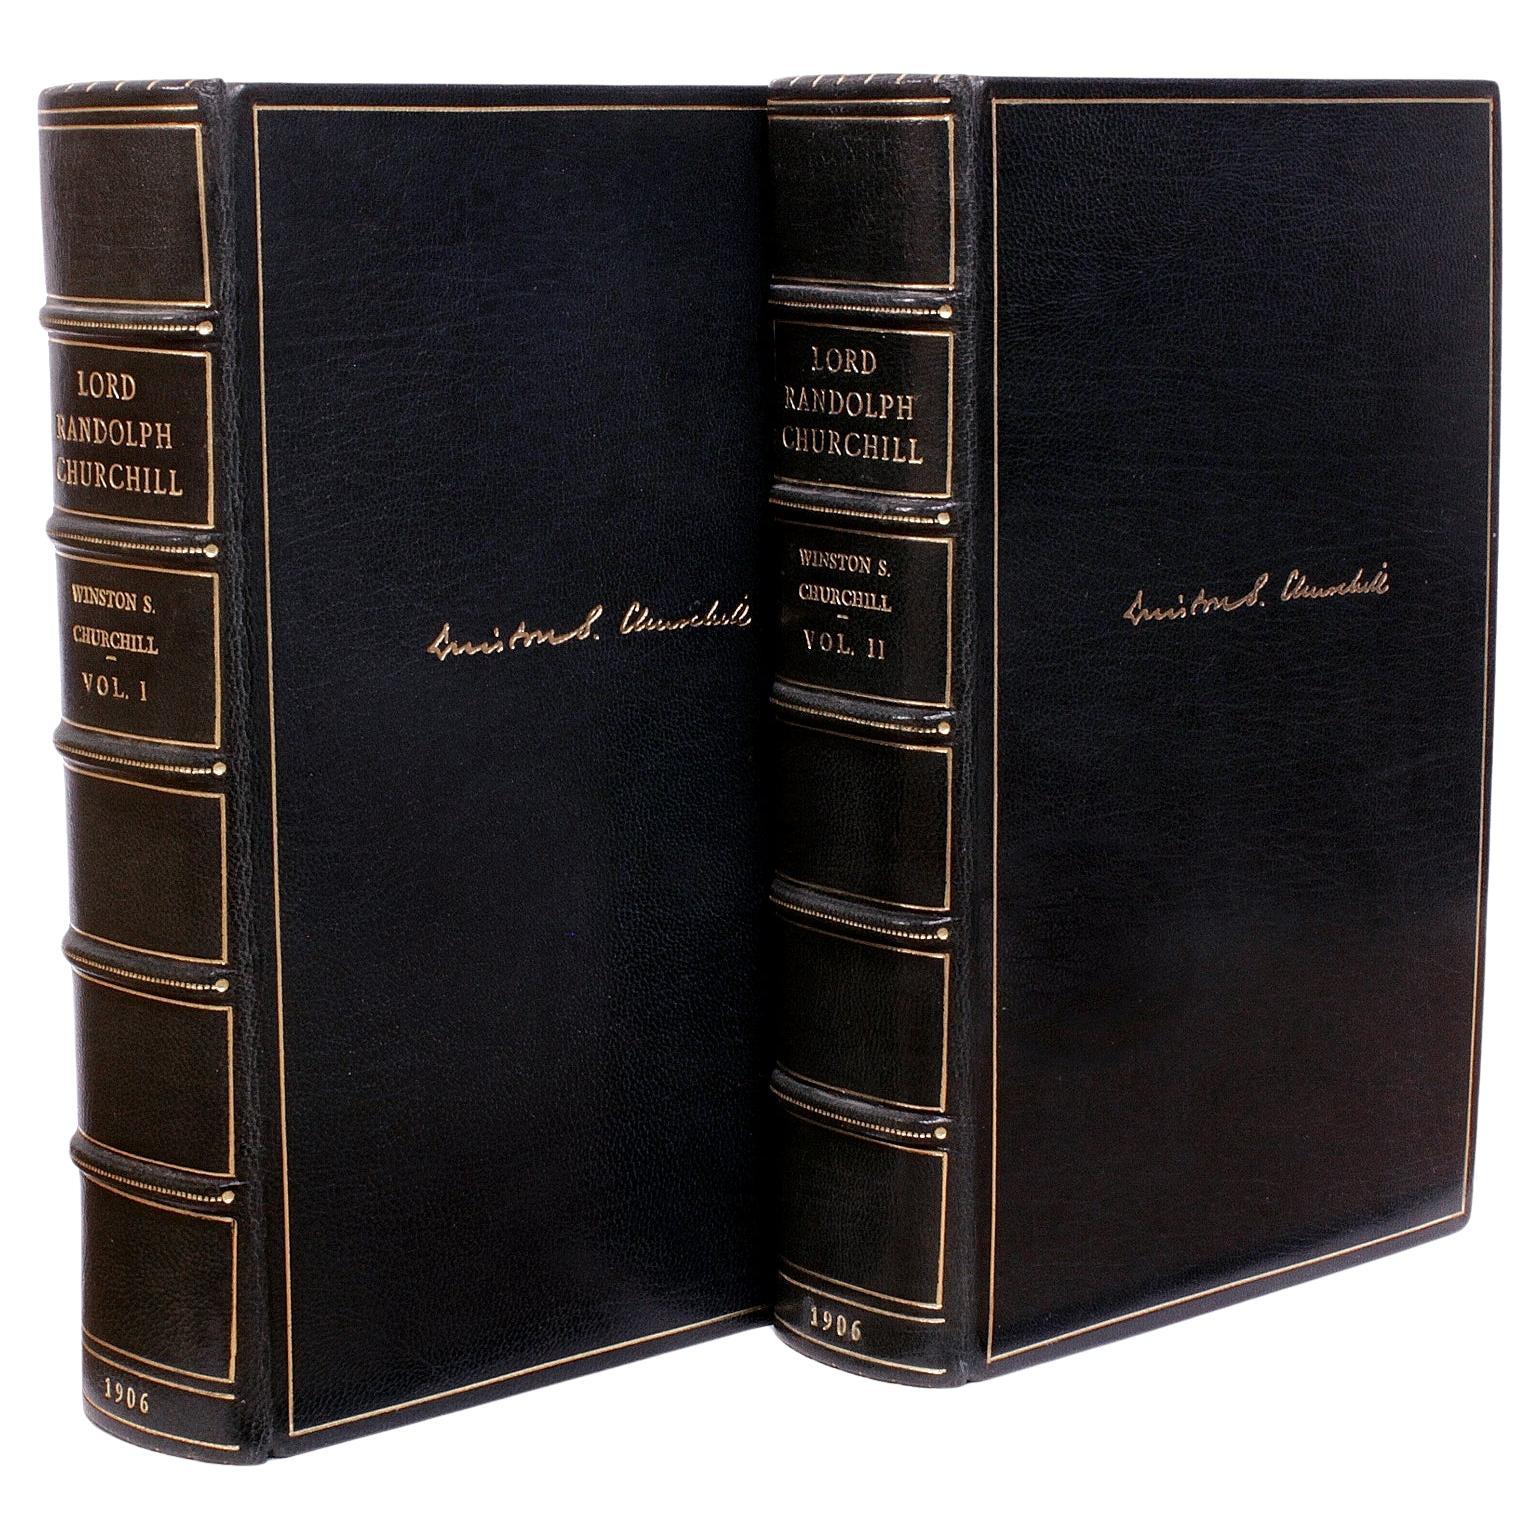 Winston CHURCHILL. Lord Randolph Churchill - 2 VOLS. - FIRST EDITION - 1906